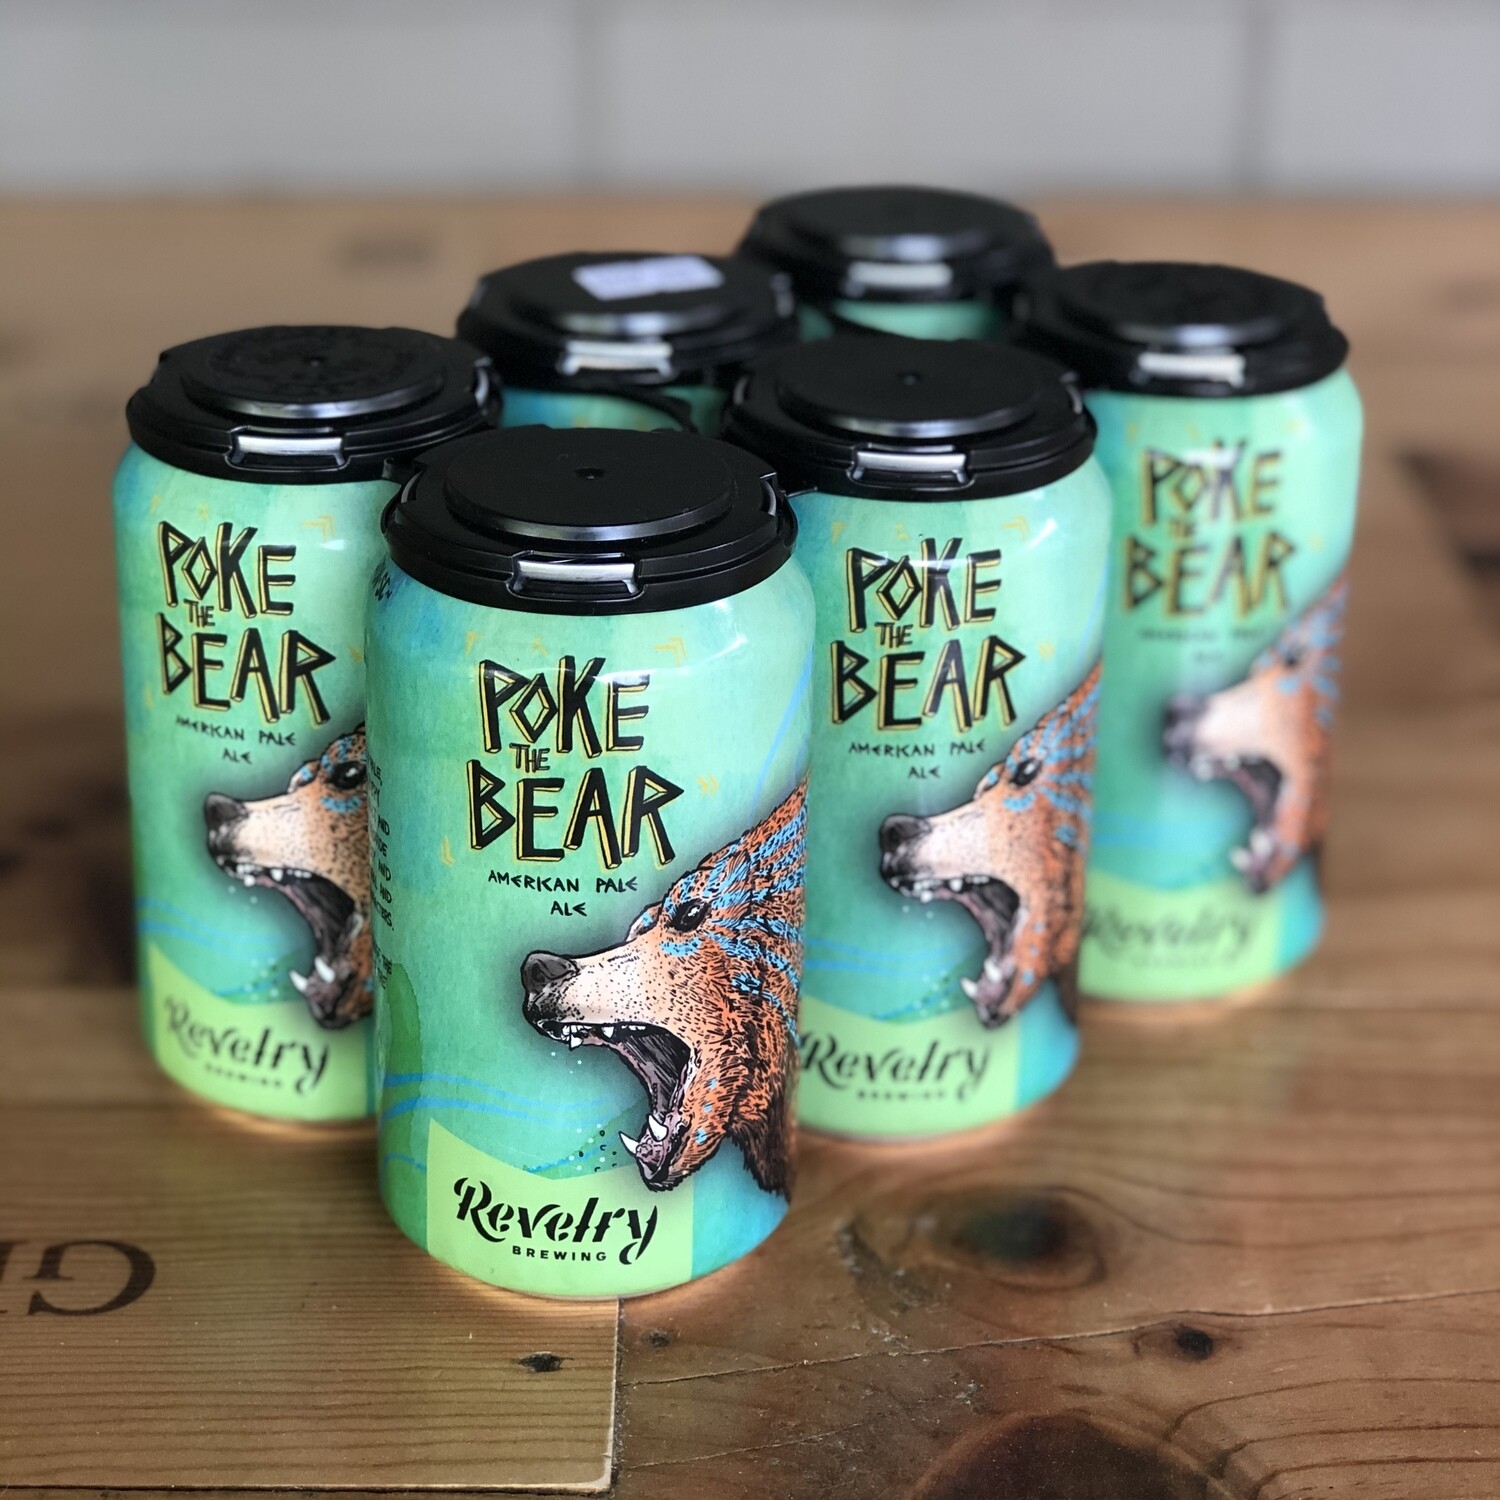 Revelry Poke The Bear (6pk)